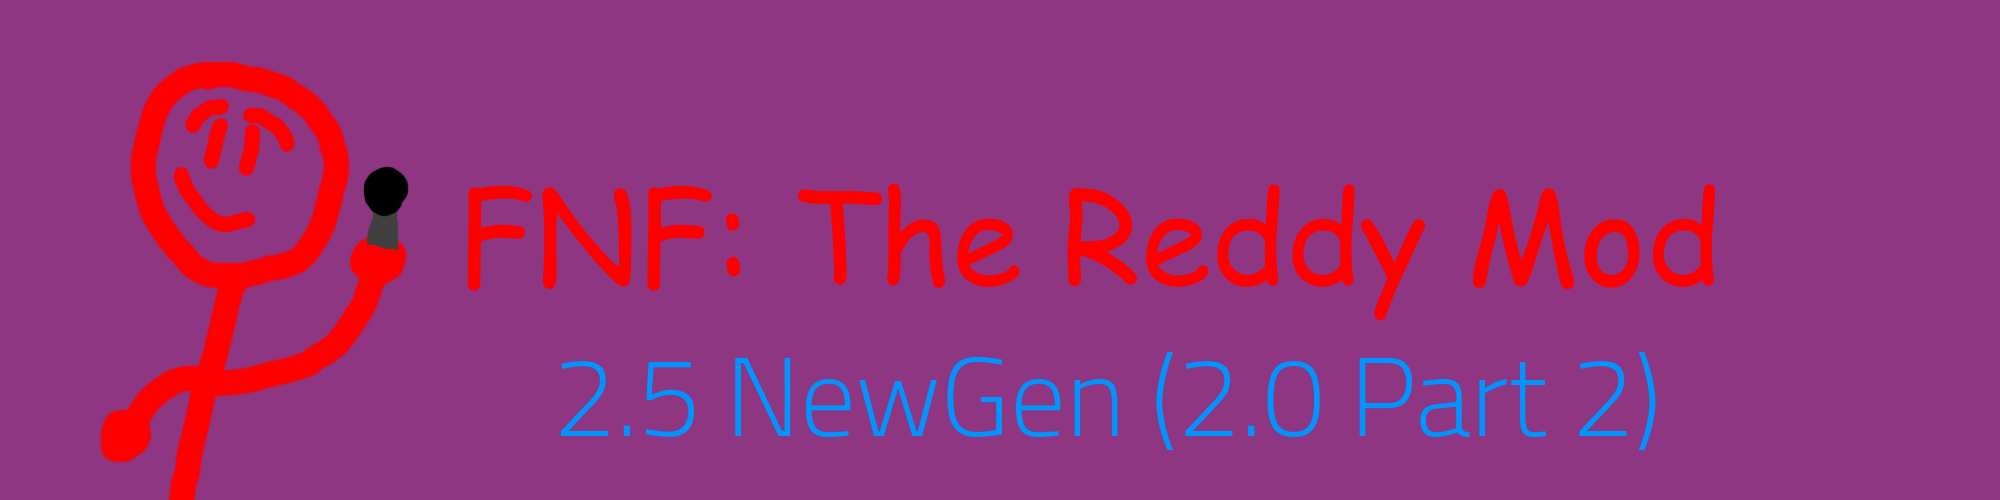 FNF: The Reddy Mod 2.5 NewGen (Normal Edition)